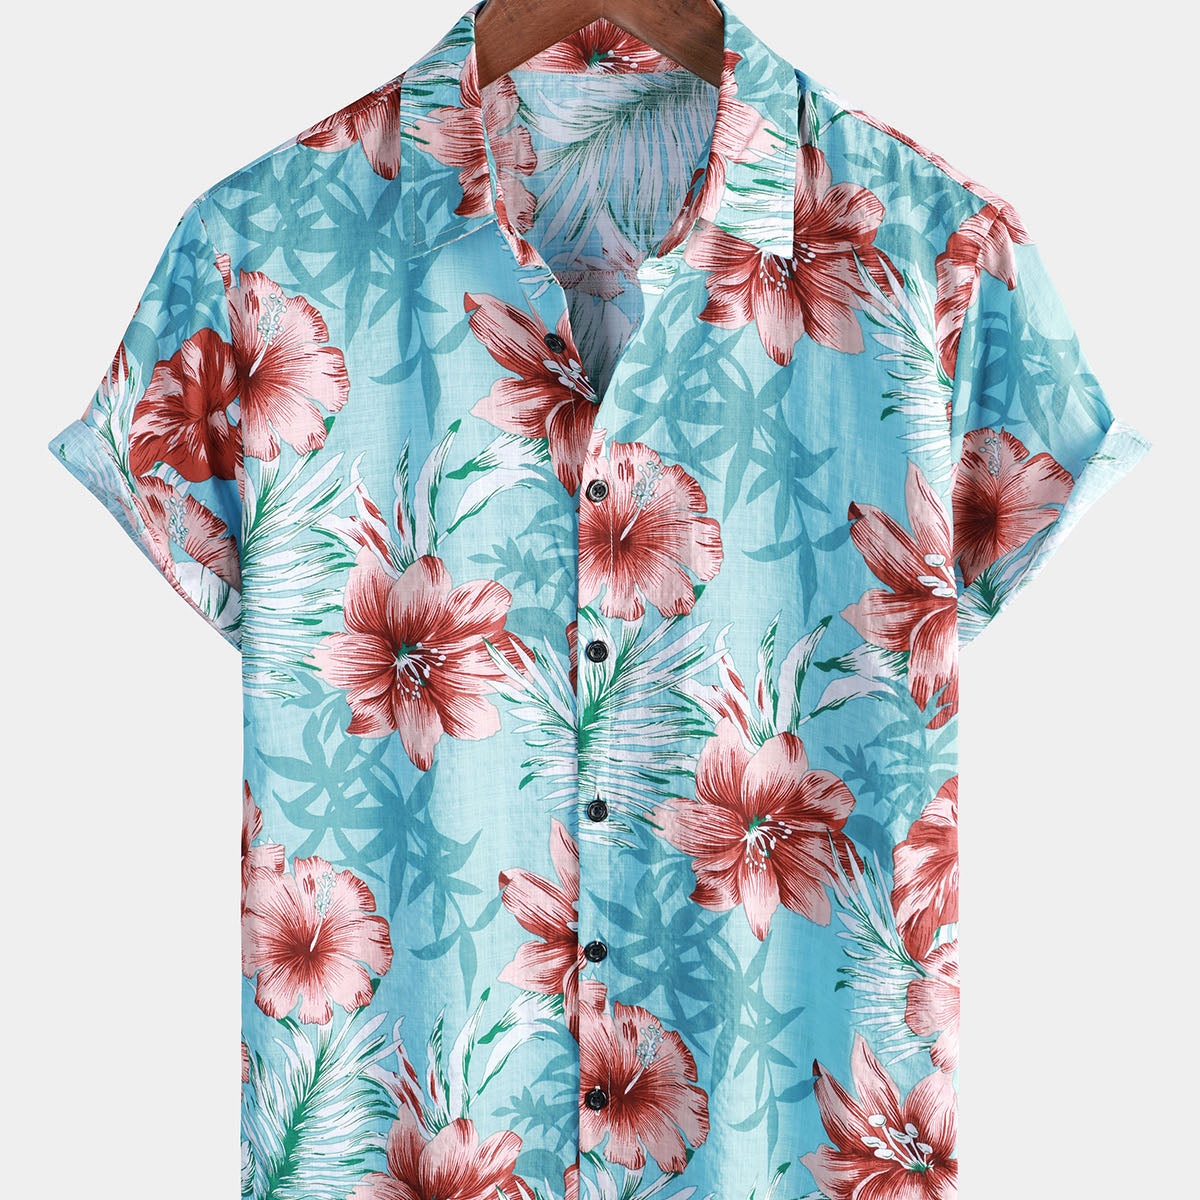 Men's Hawaiian Tropical Button Hibiscus Floral Print Vacation Beach Blue Short Sleeve Shirt